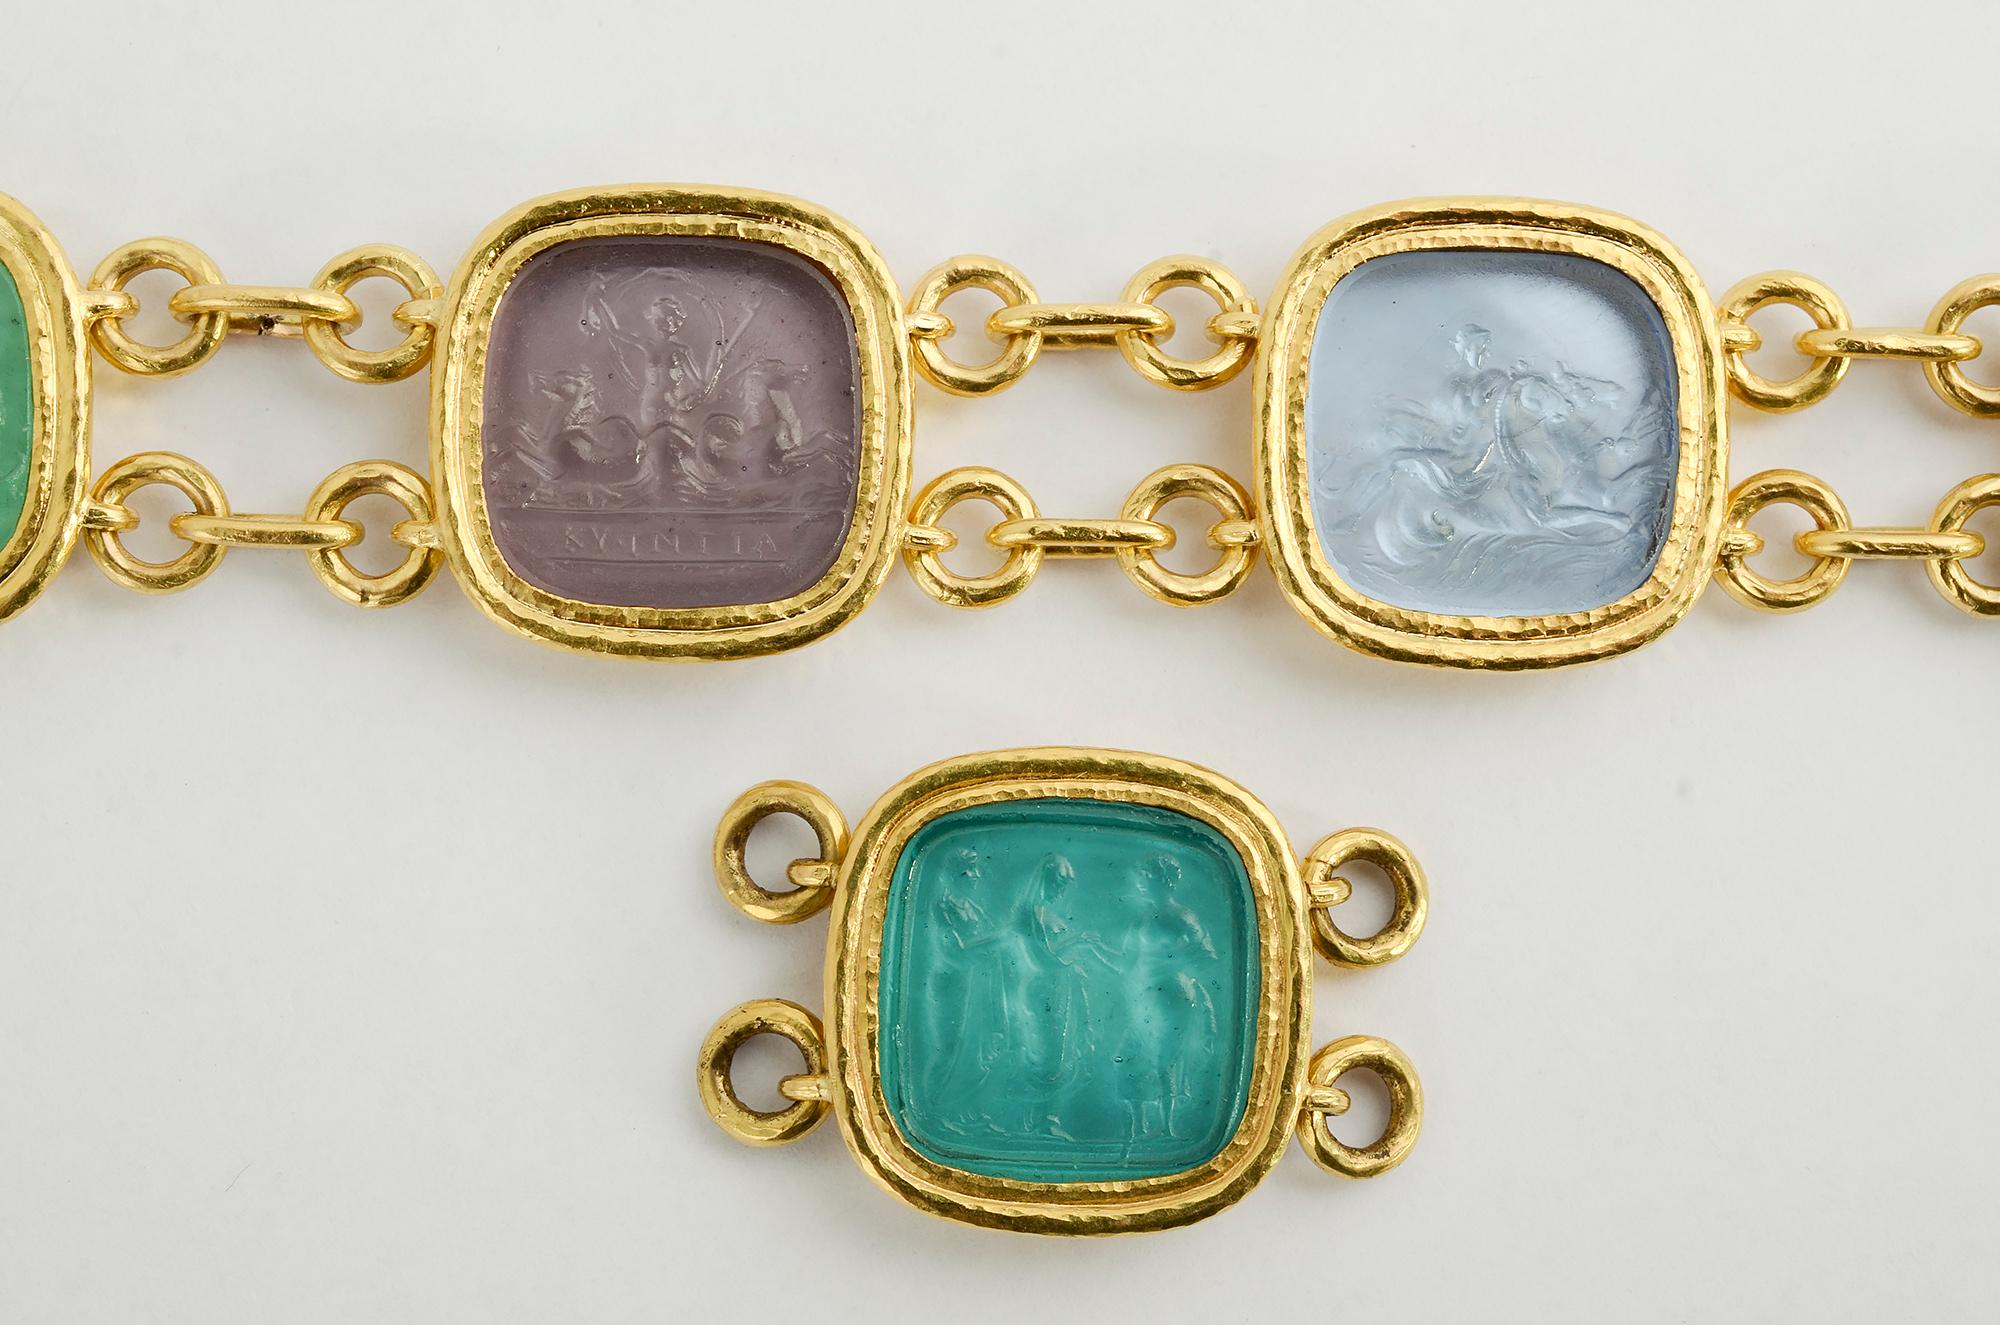 Contemporary Elizabeth Locke Intaglio Gold Bracelet with Pendant